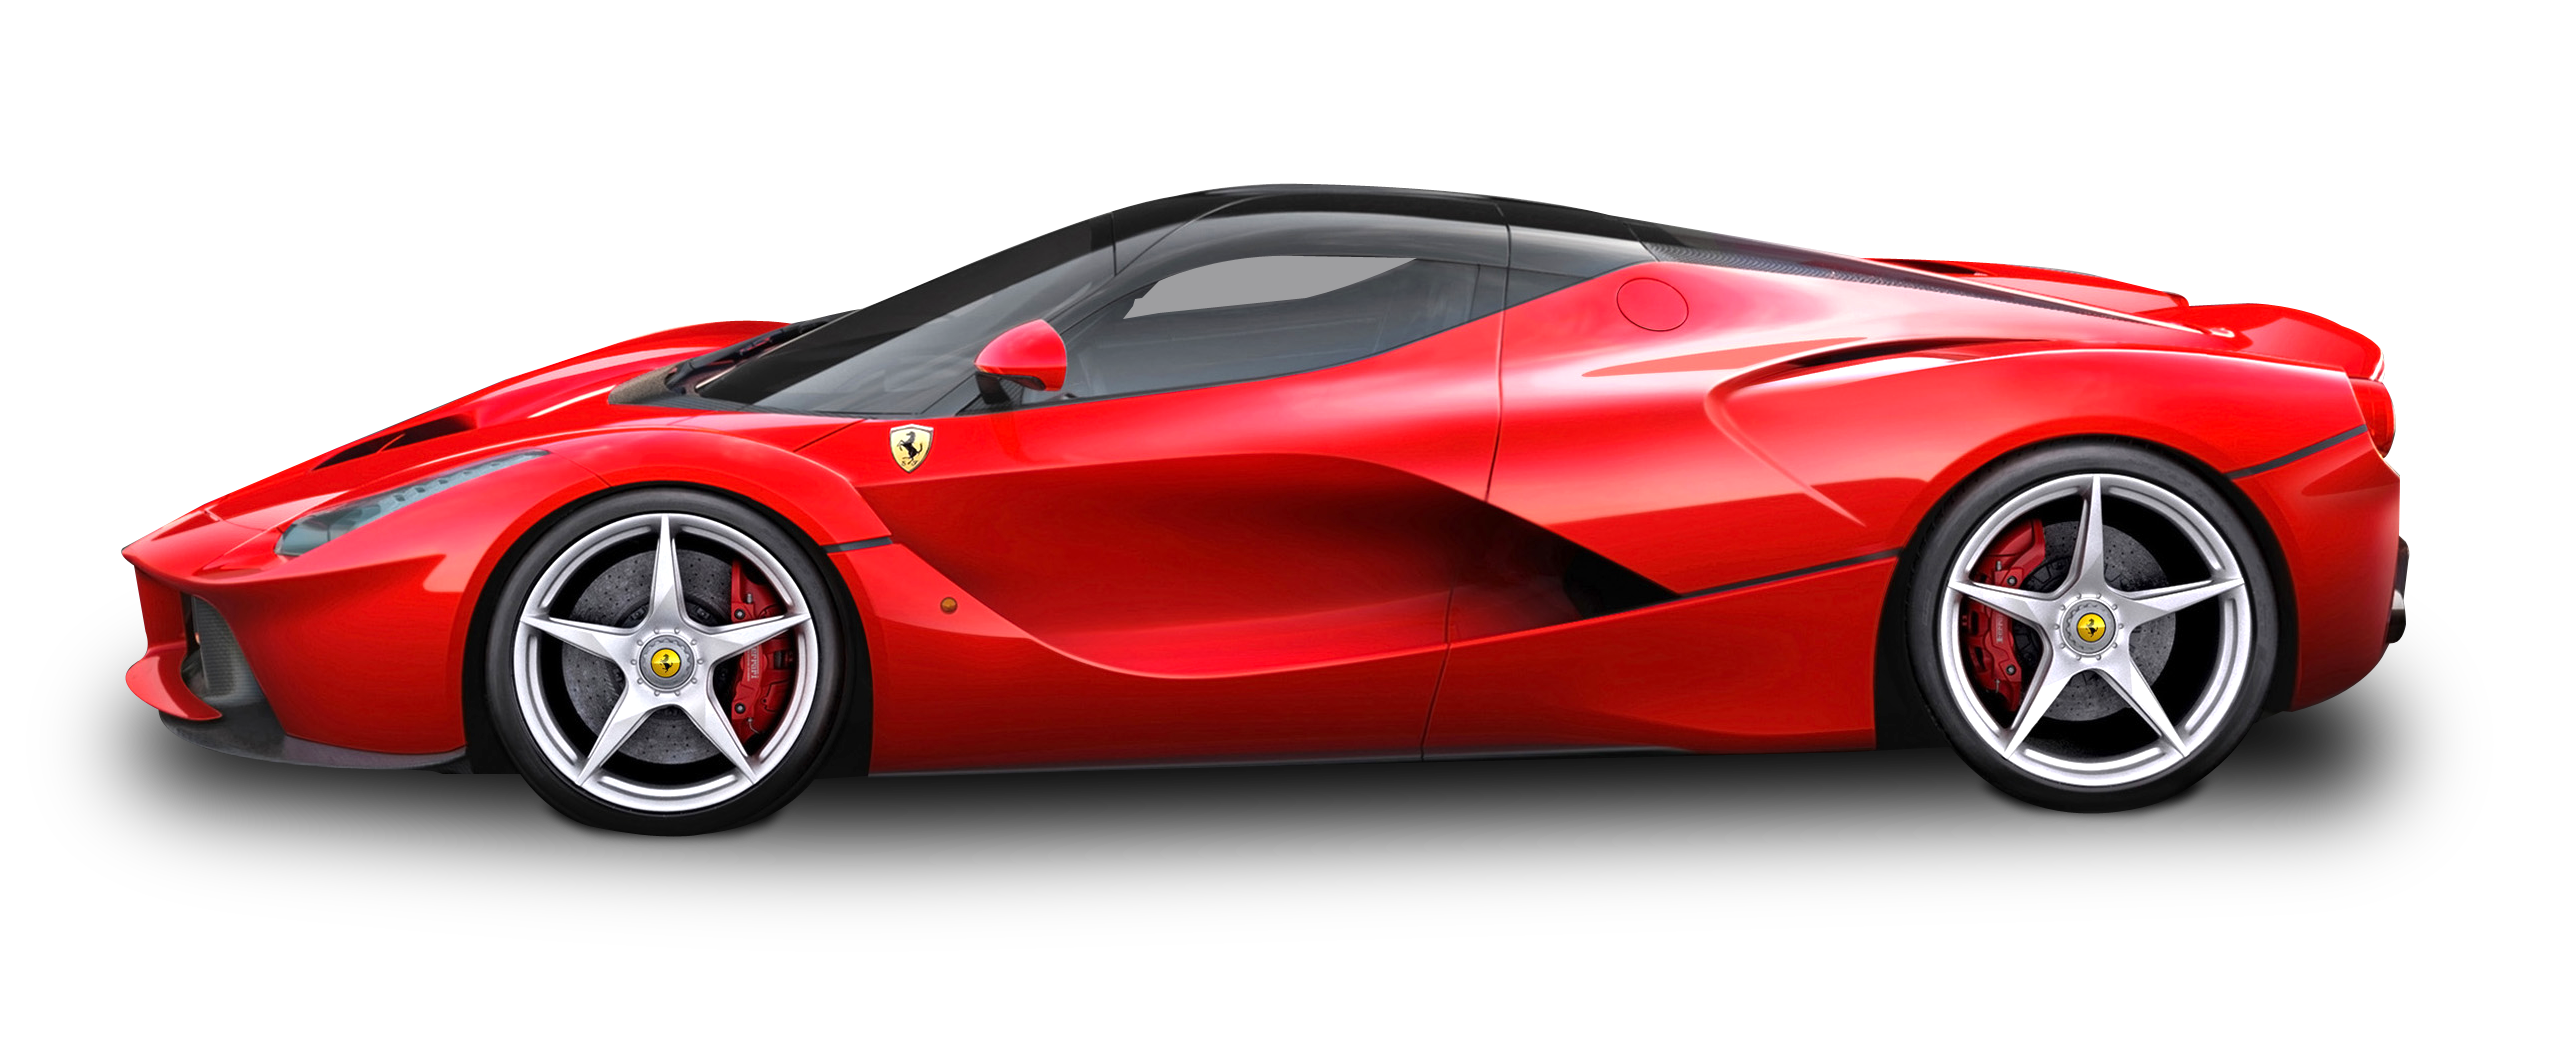 Red Ferrari Laferrari Car Png Image Purepng Free Transparent Cc0